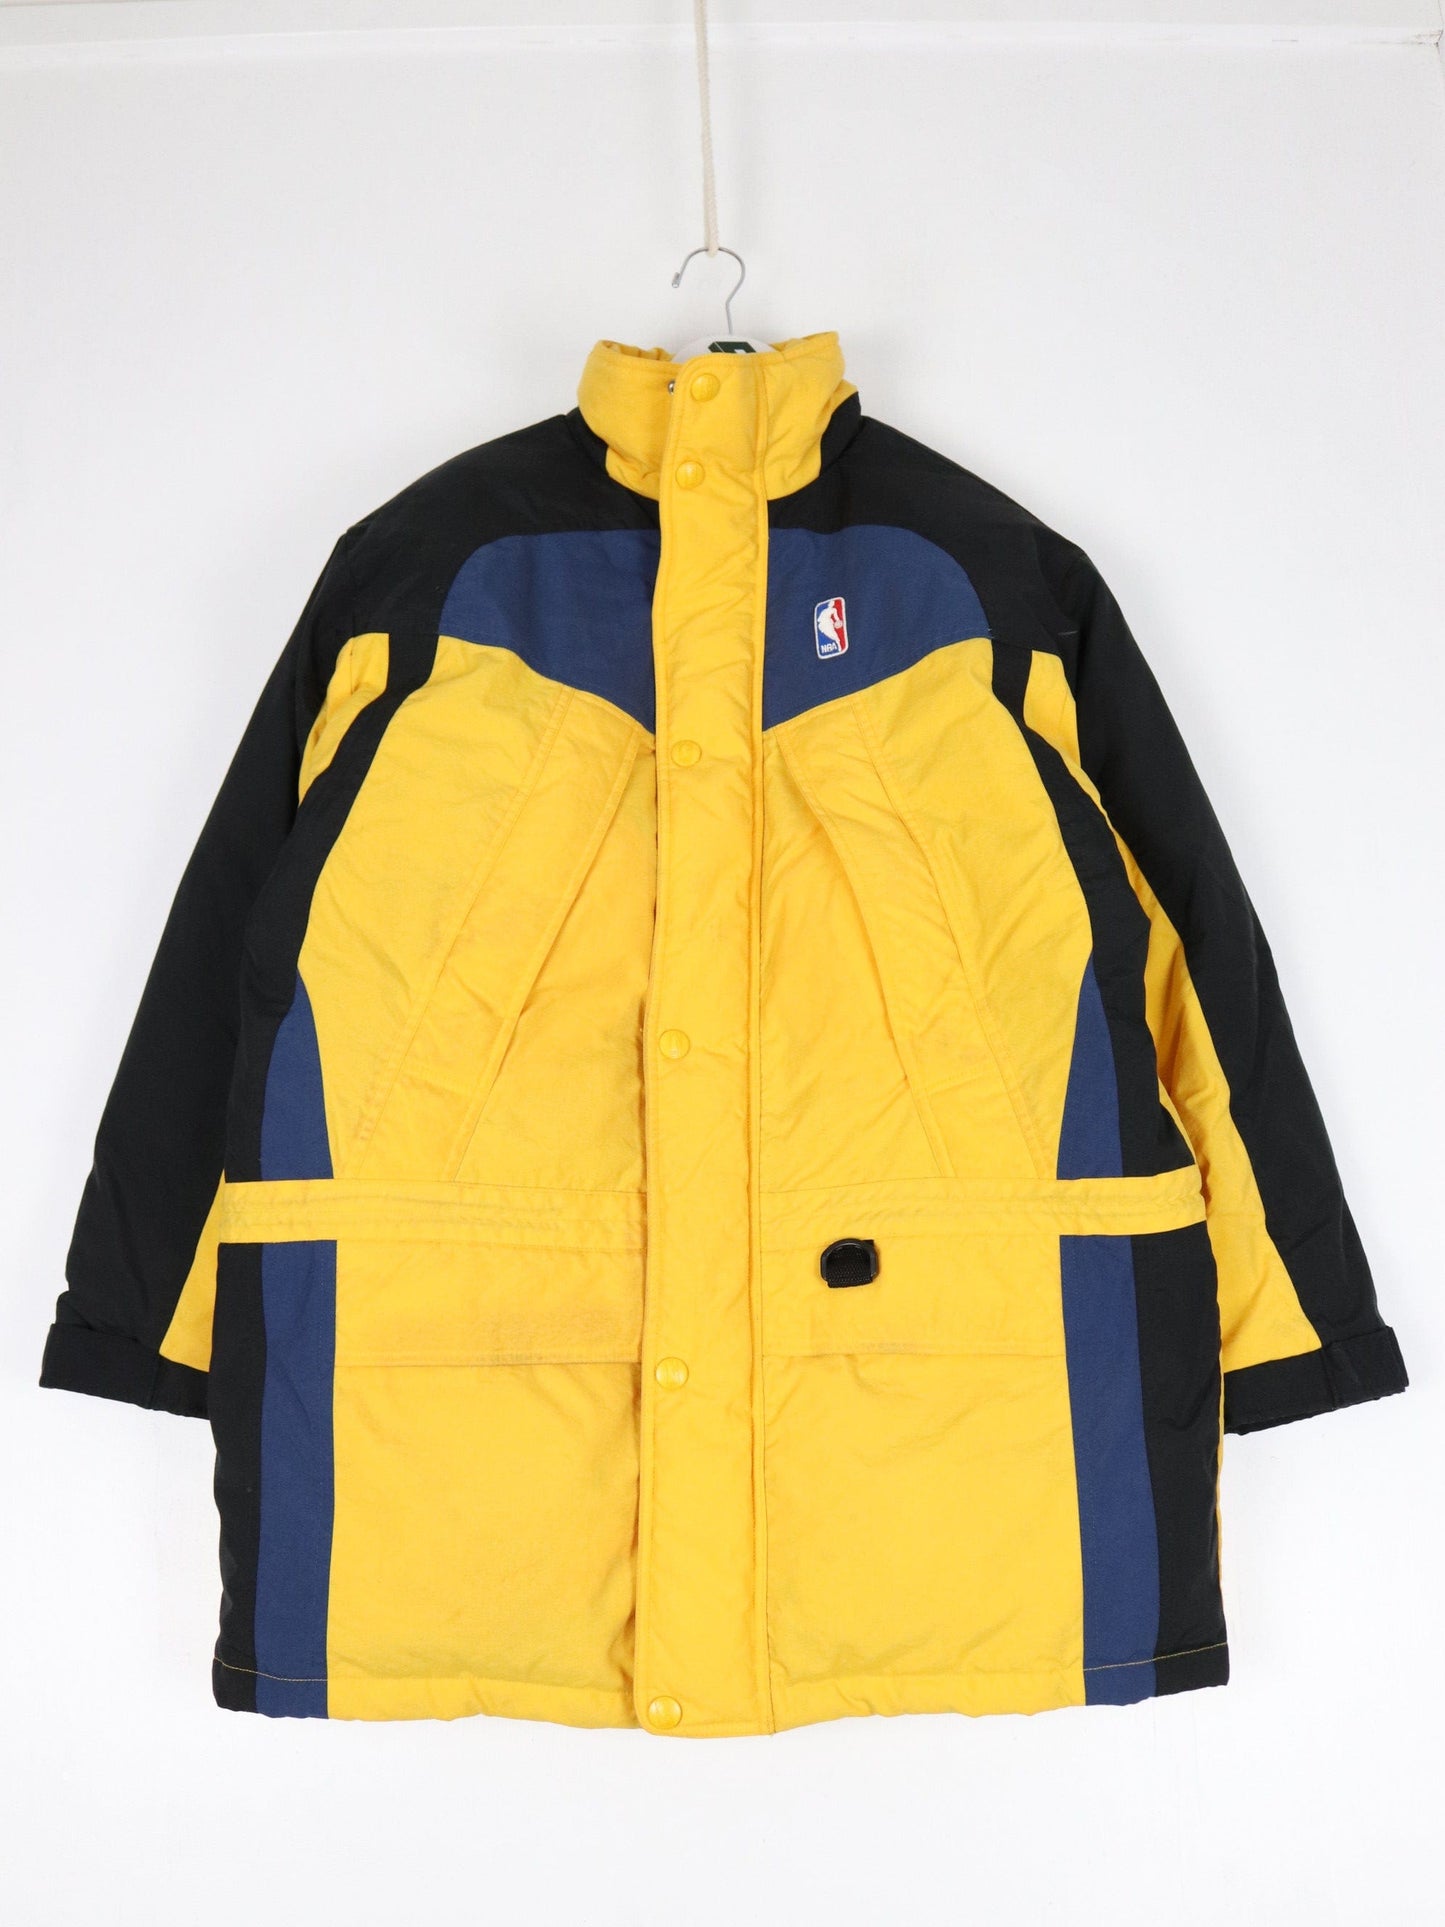 NBA Jackets & Coats Vintage Indiana Pacers Jacket Mens Large Yellow NBA Parka Coat